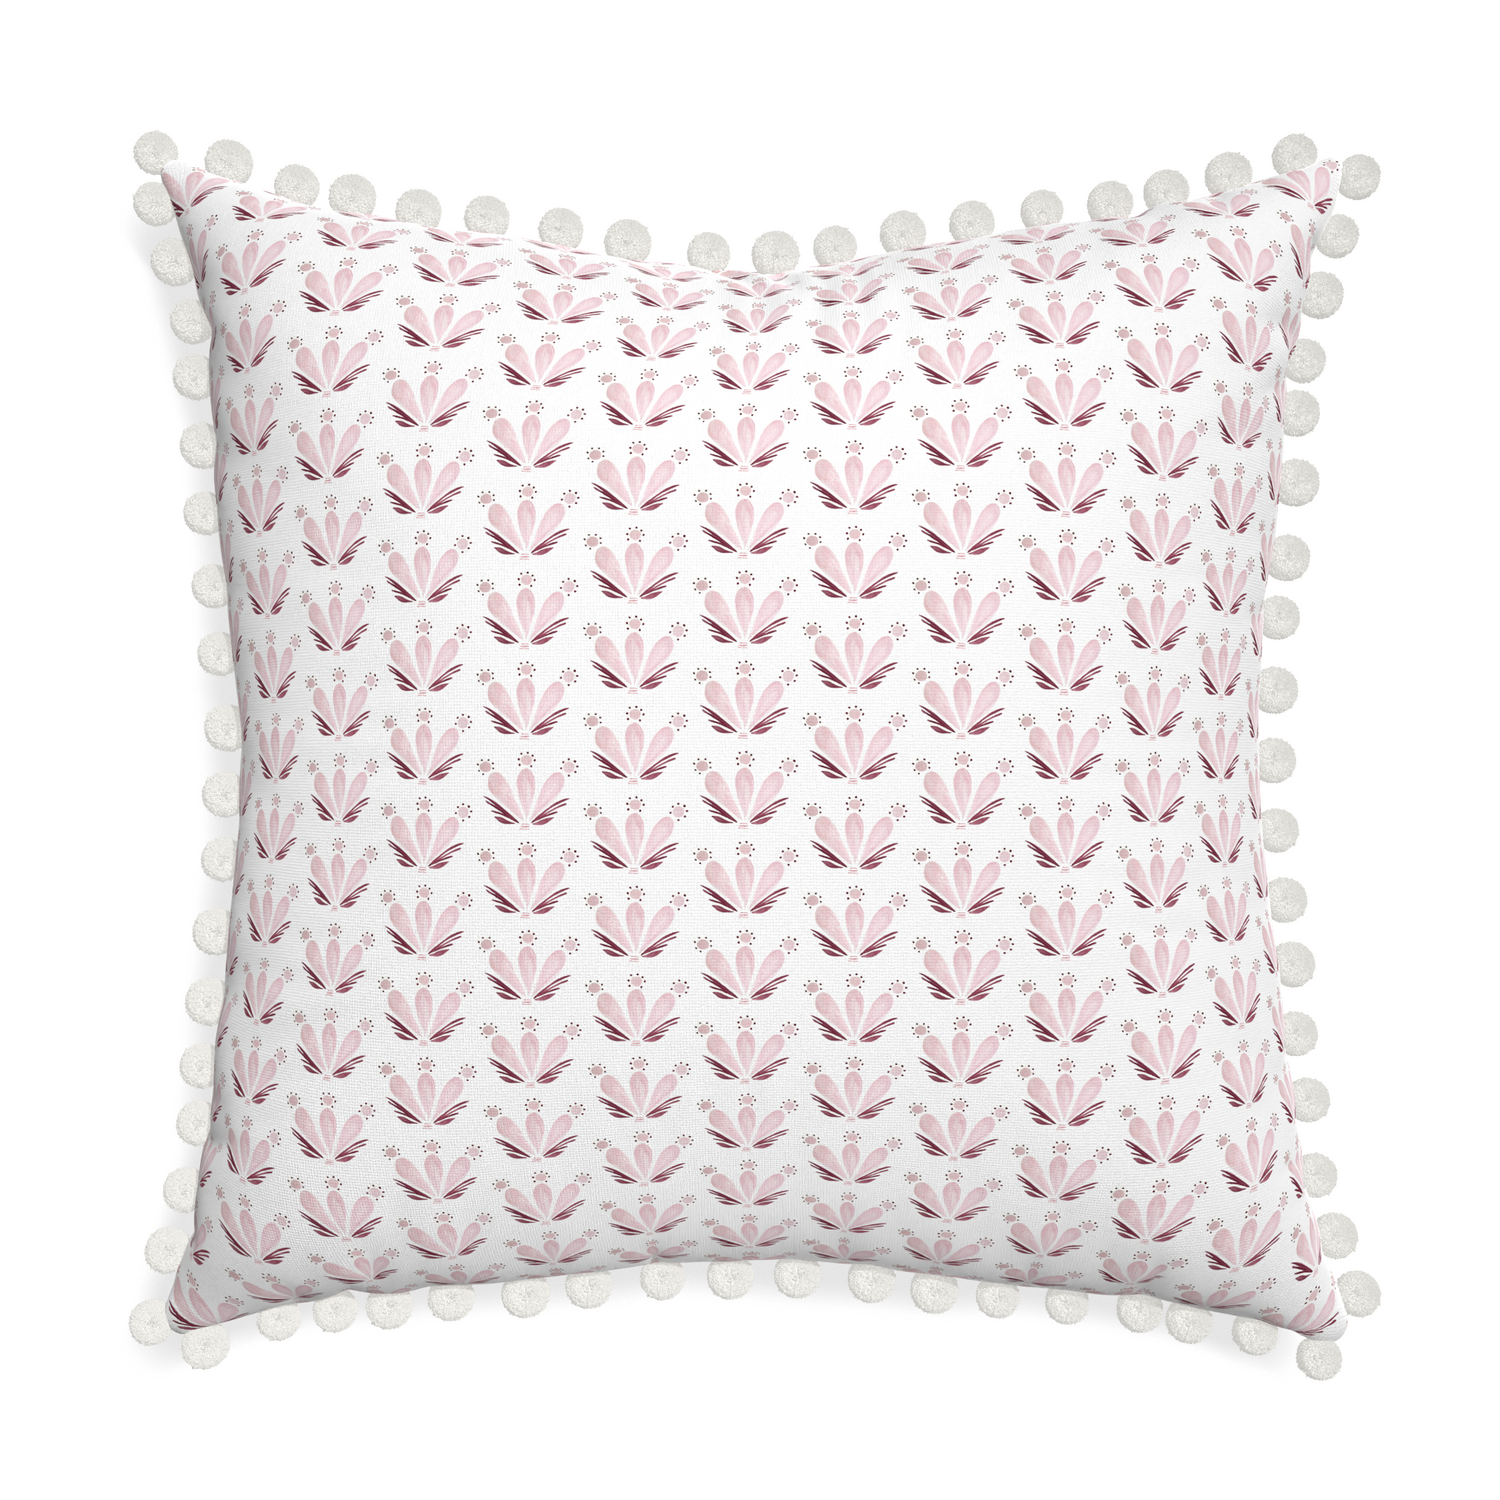 Euro-sham serena pink custom pillow with snow pom pom on white background